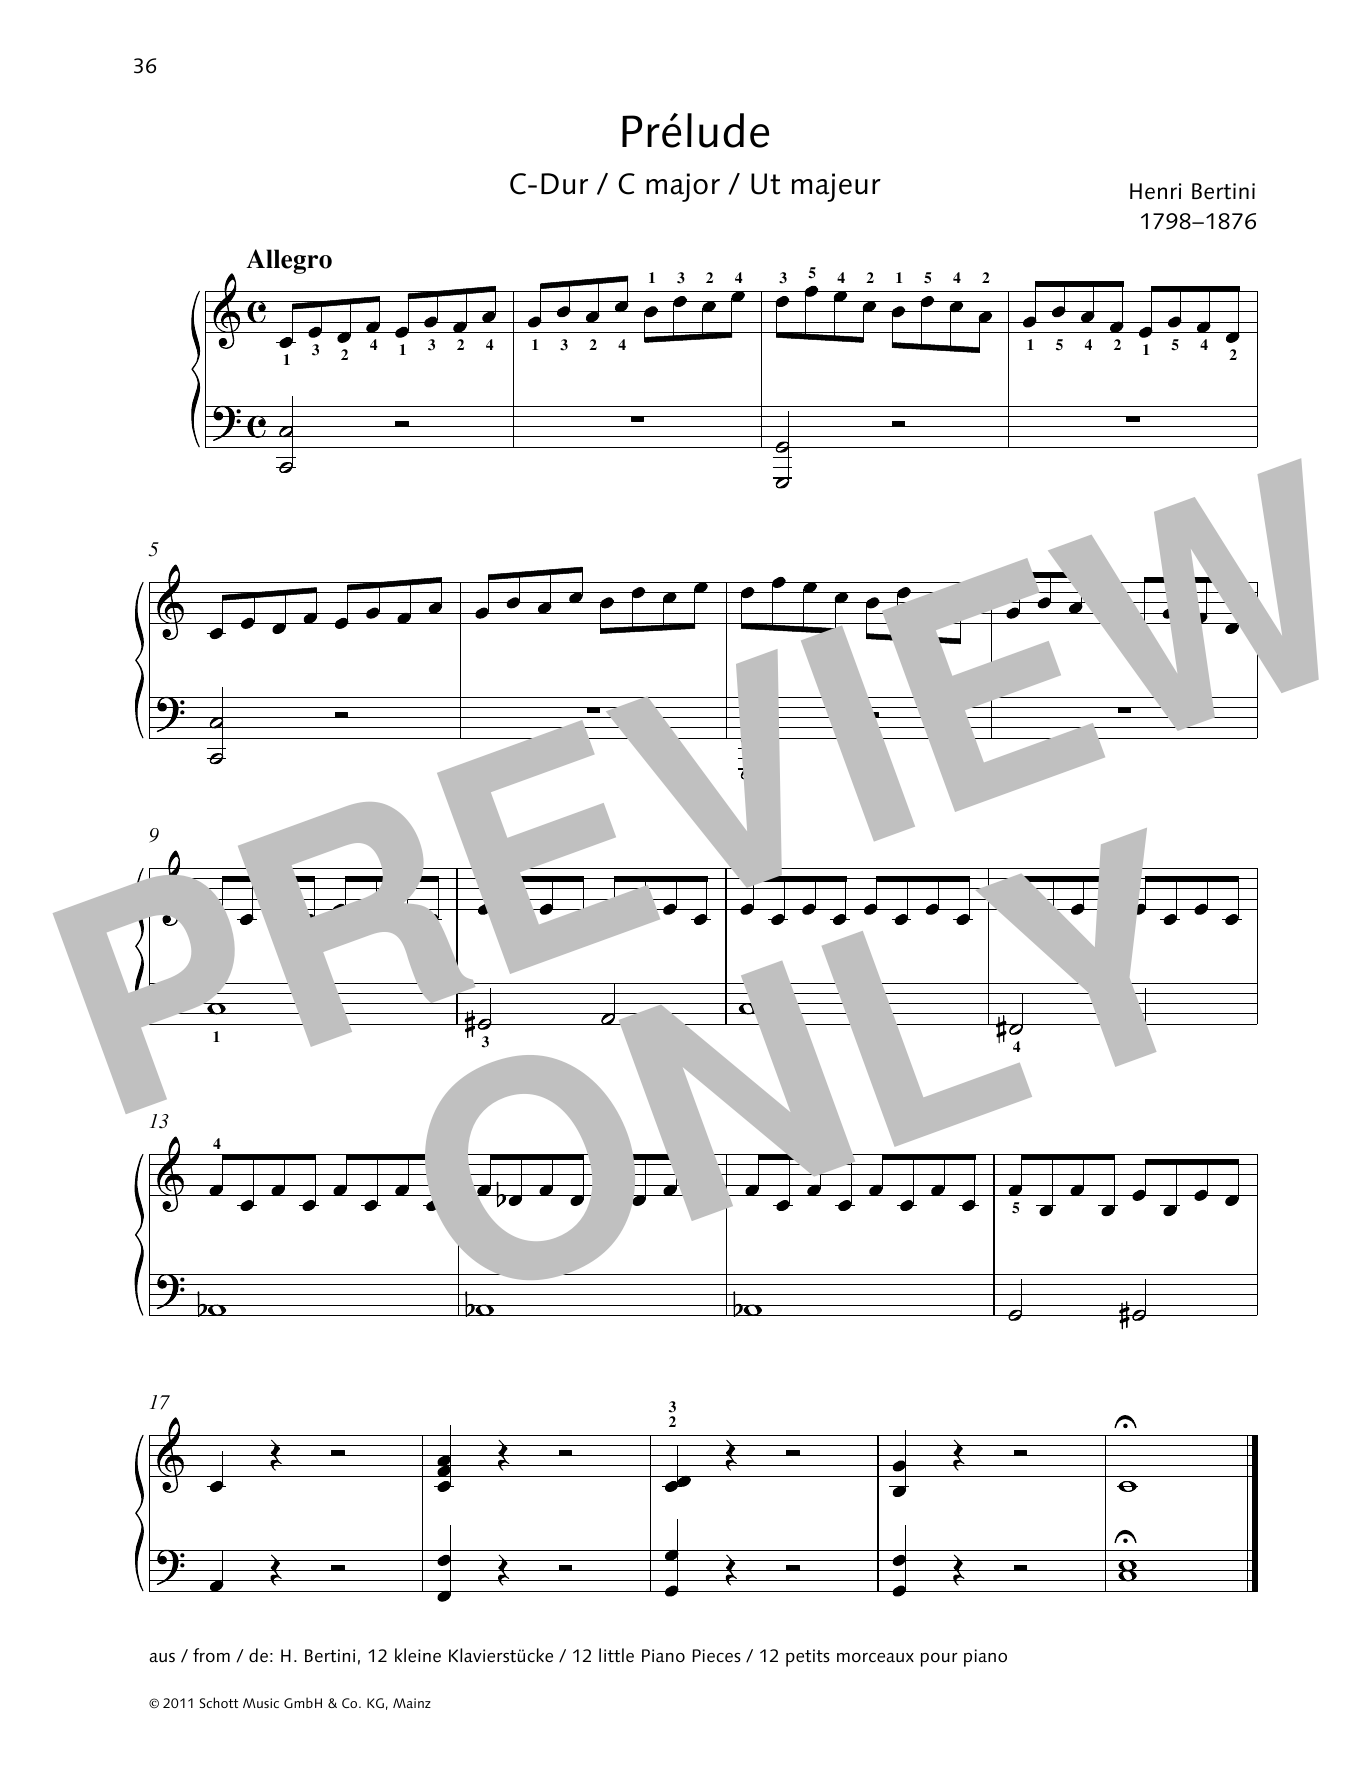 Henri Bertini Prélude C major Sheet Music Notes & Chords for Piano Solo - Download or Print PDF